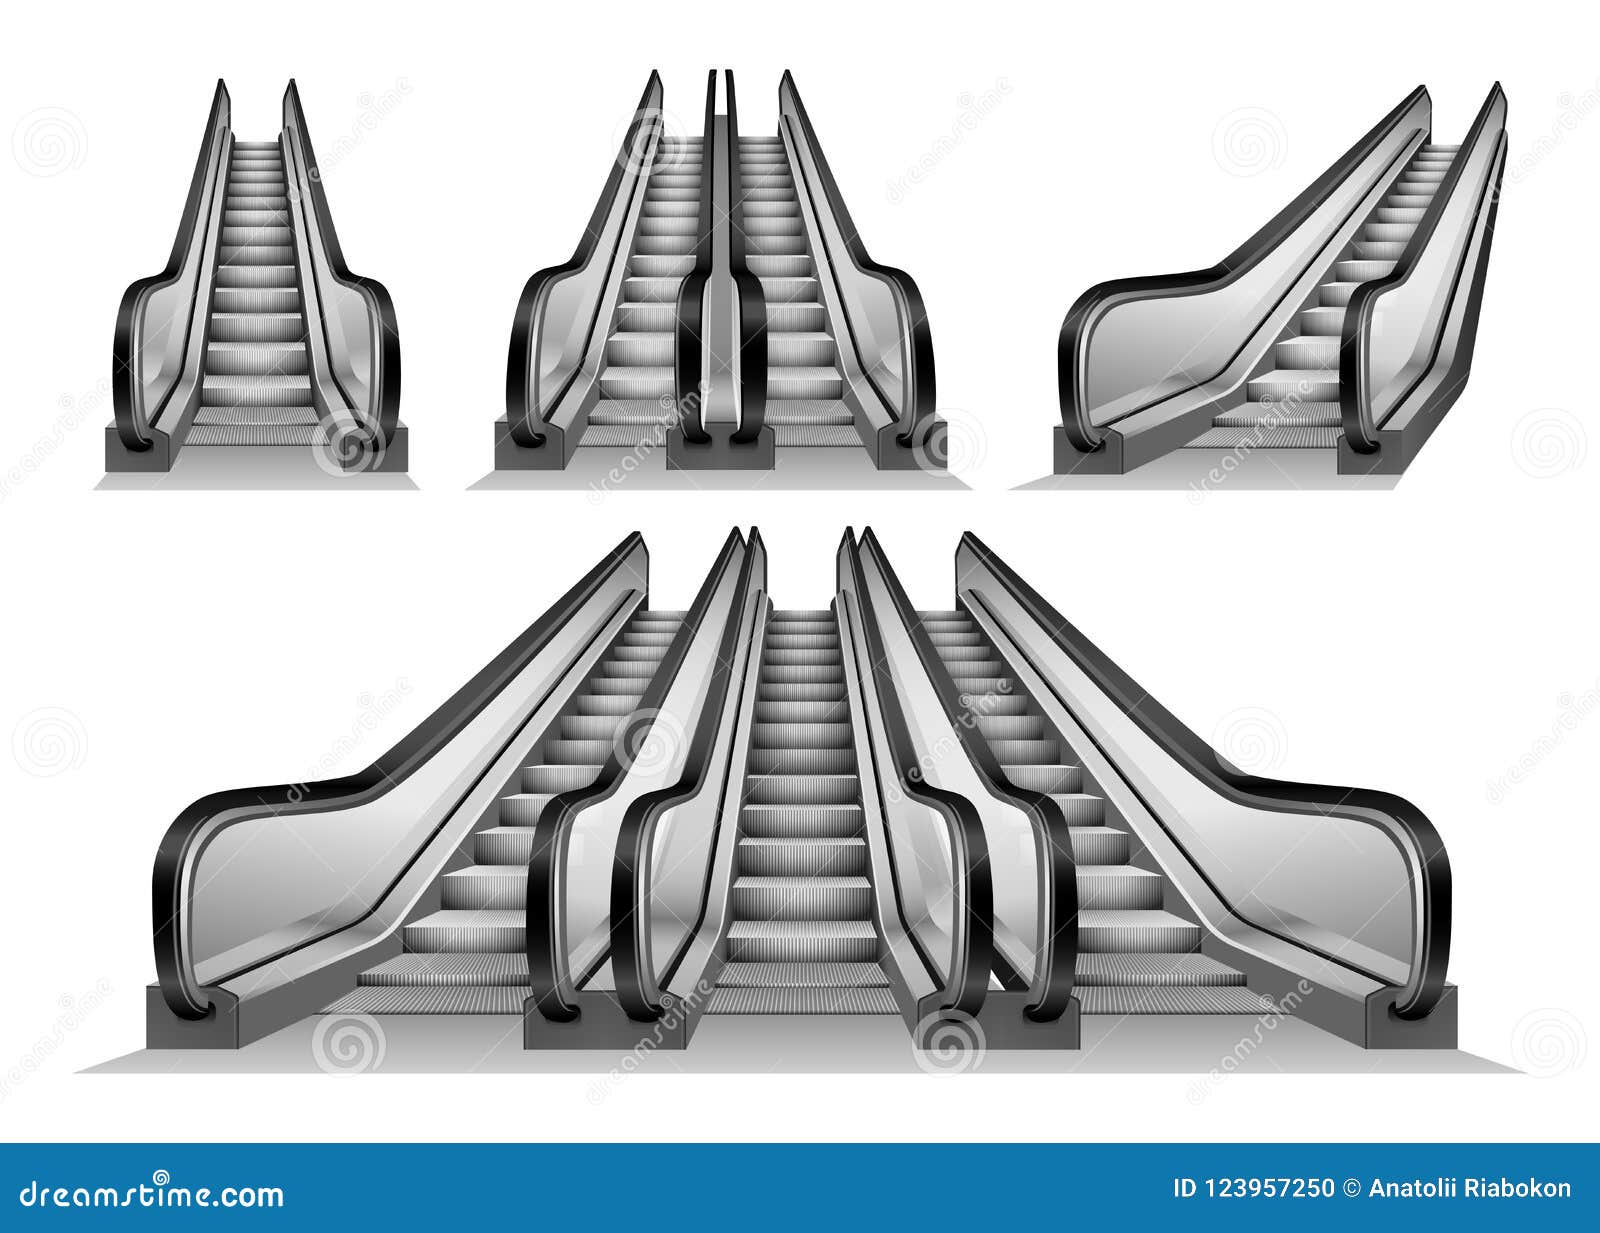 Download Escalator Elevator Mockup Set, Realistic Style Stock ...